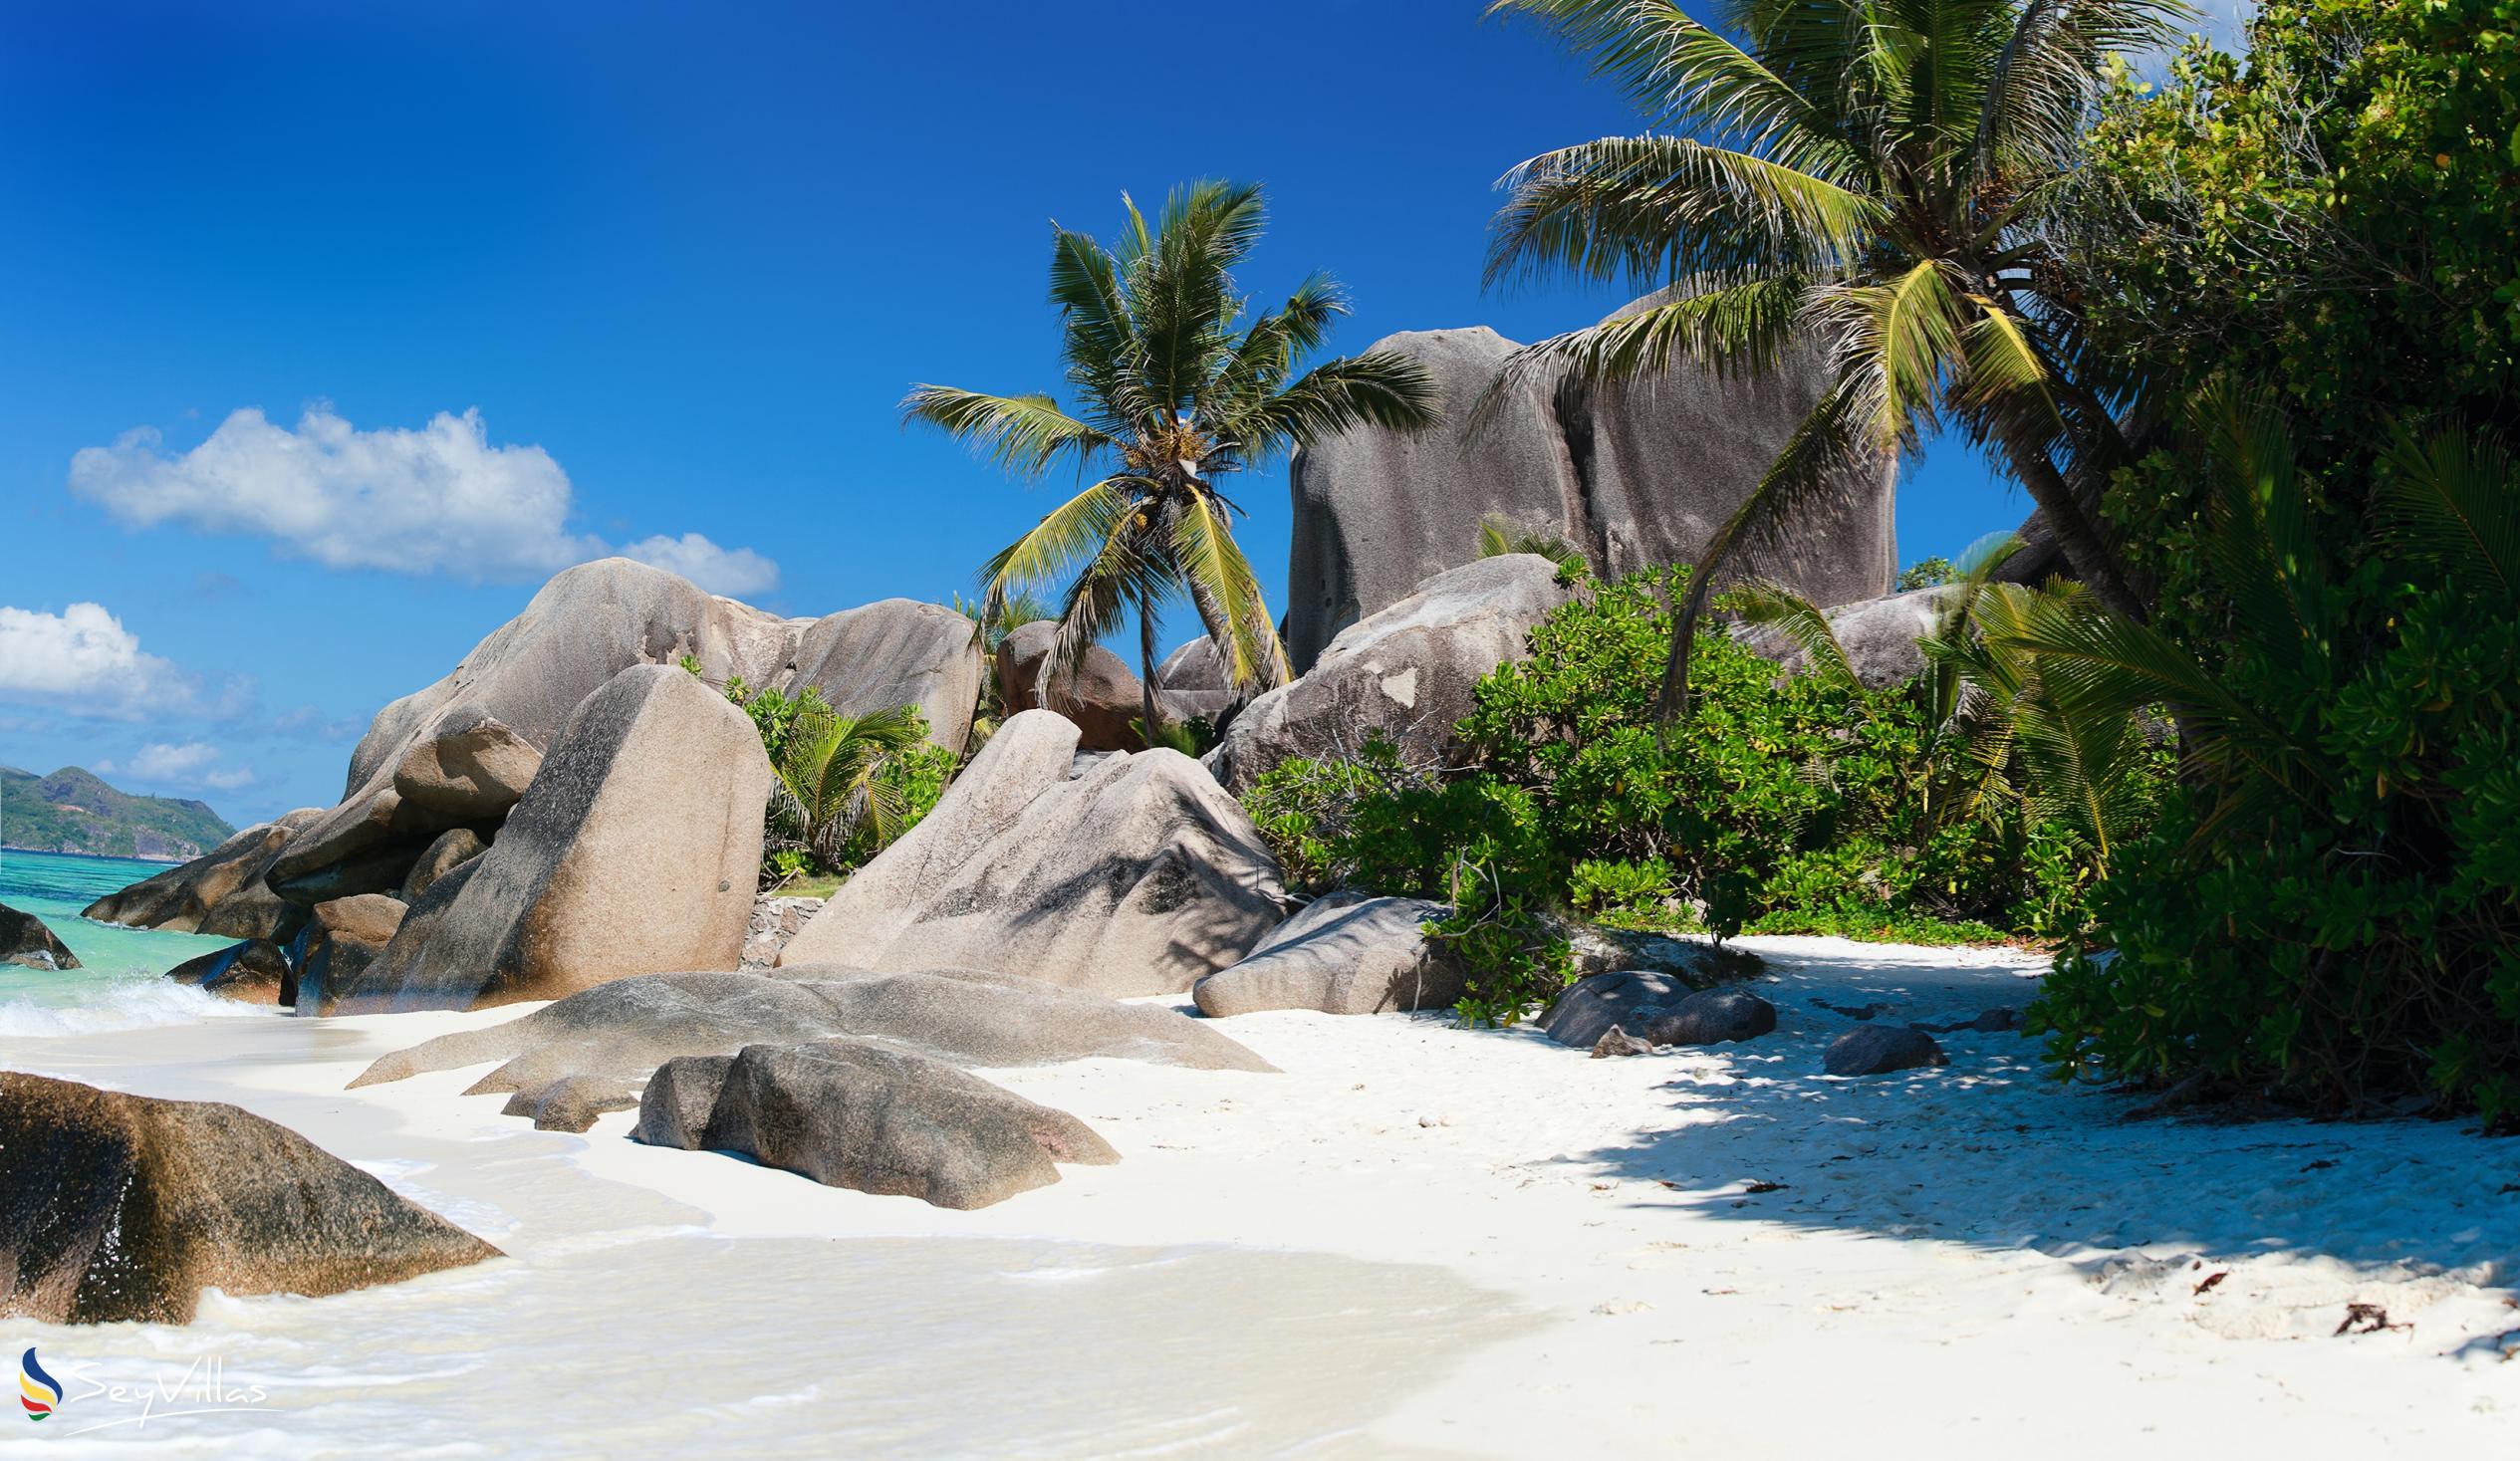 Photo 46: Pegasus Cruise (Variety Garden of Eden 7 nights) - Beaches - Seychelles (Seychelles)